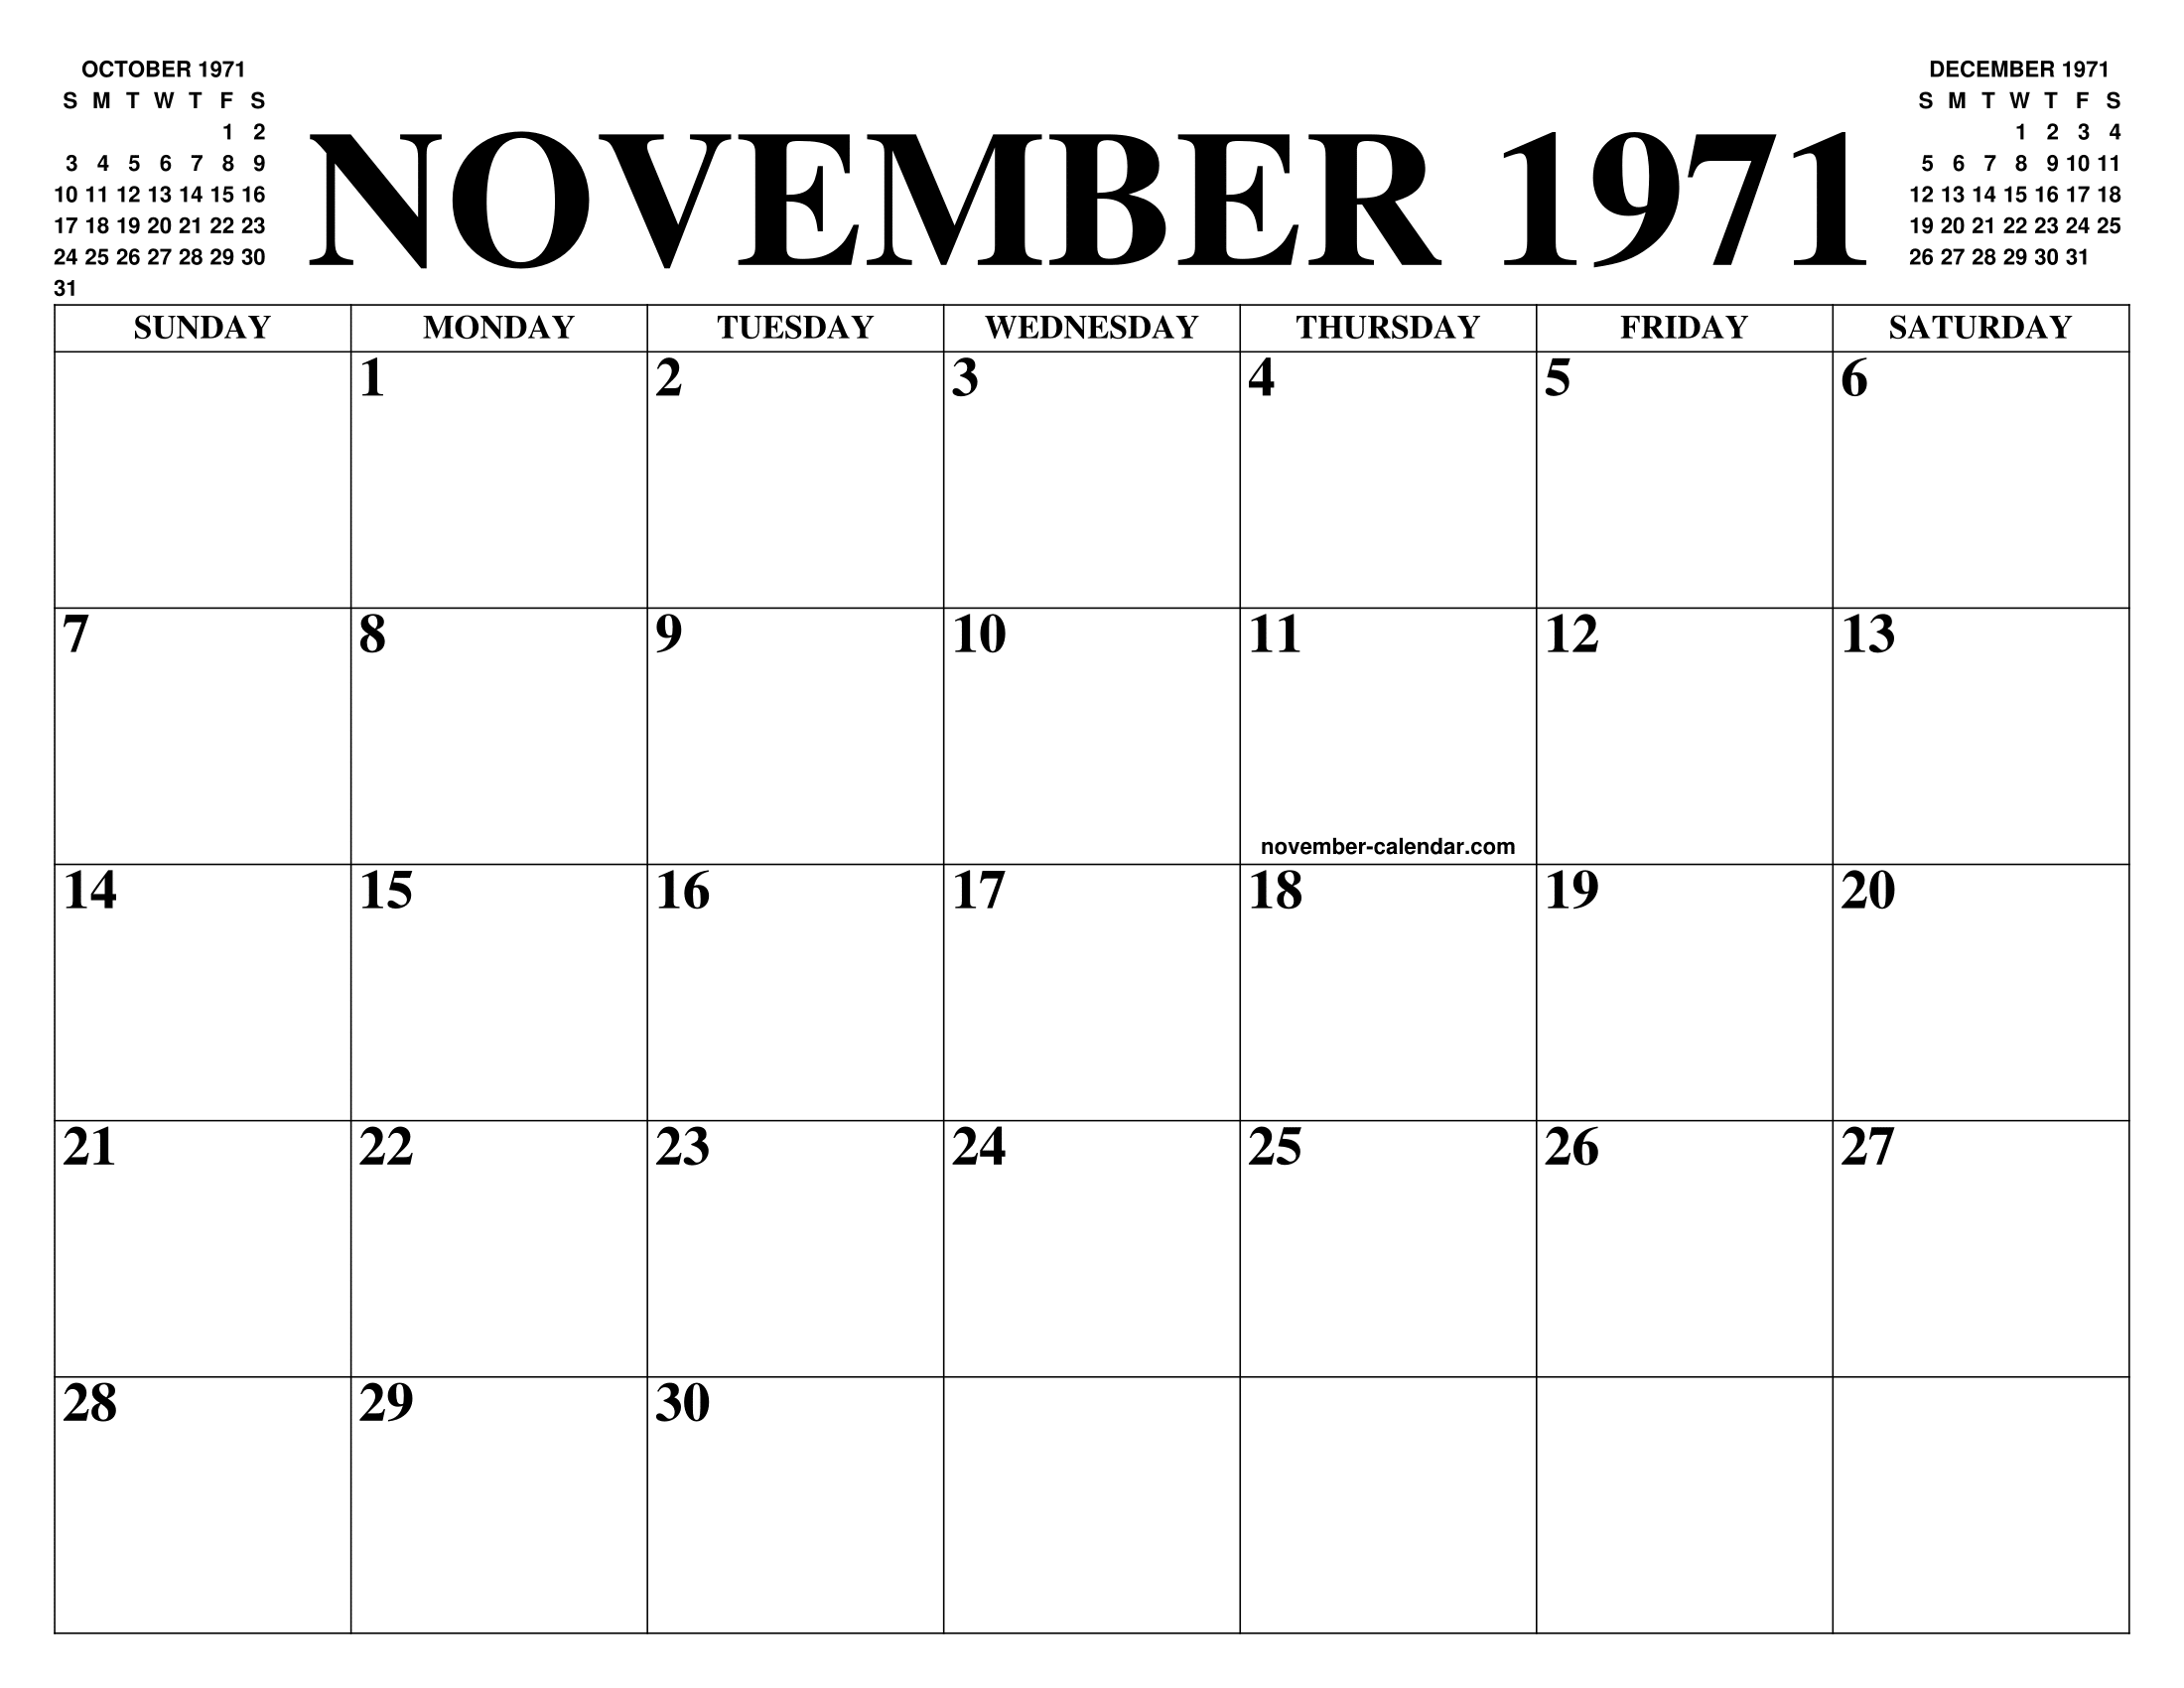 NOVEMBER 1971 CALENDAR OF THE MONTH: FREE PRINTABLE NOVEMBER CALENDAR